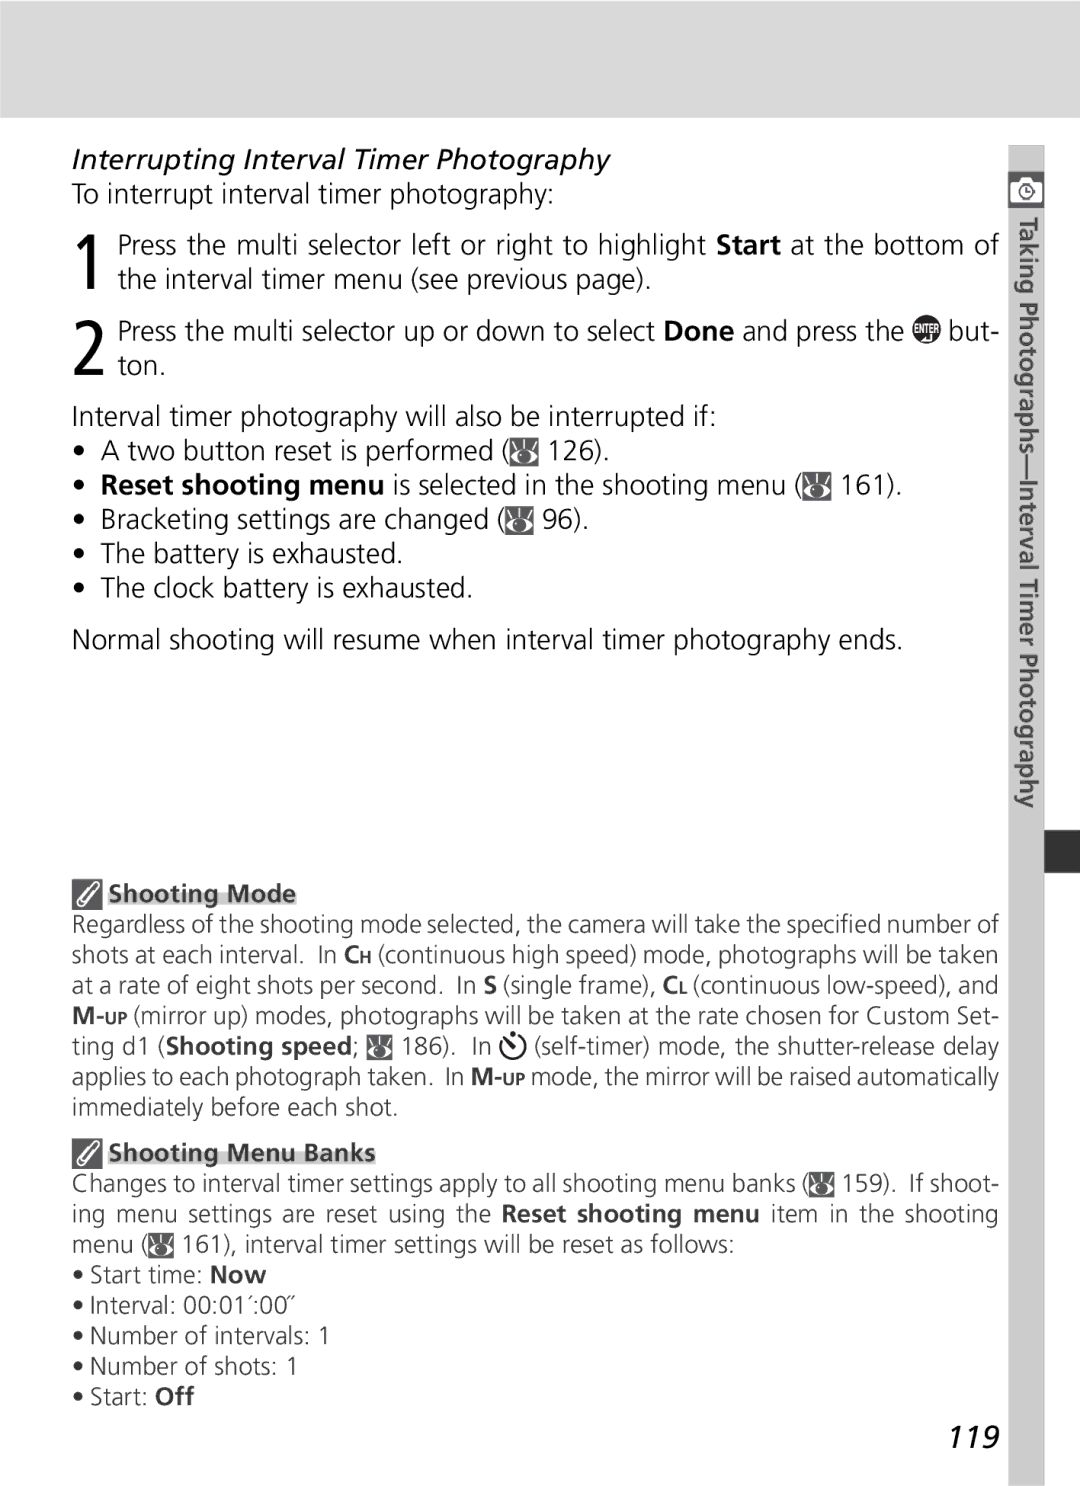 Nikon D2Hs manual 119, Interrupting Interval Timer Photography, Shooting Menu Banks 